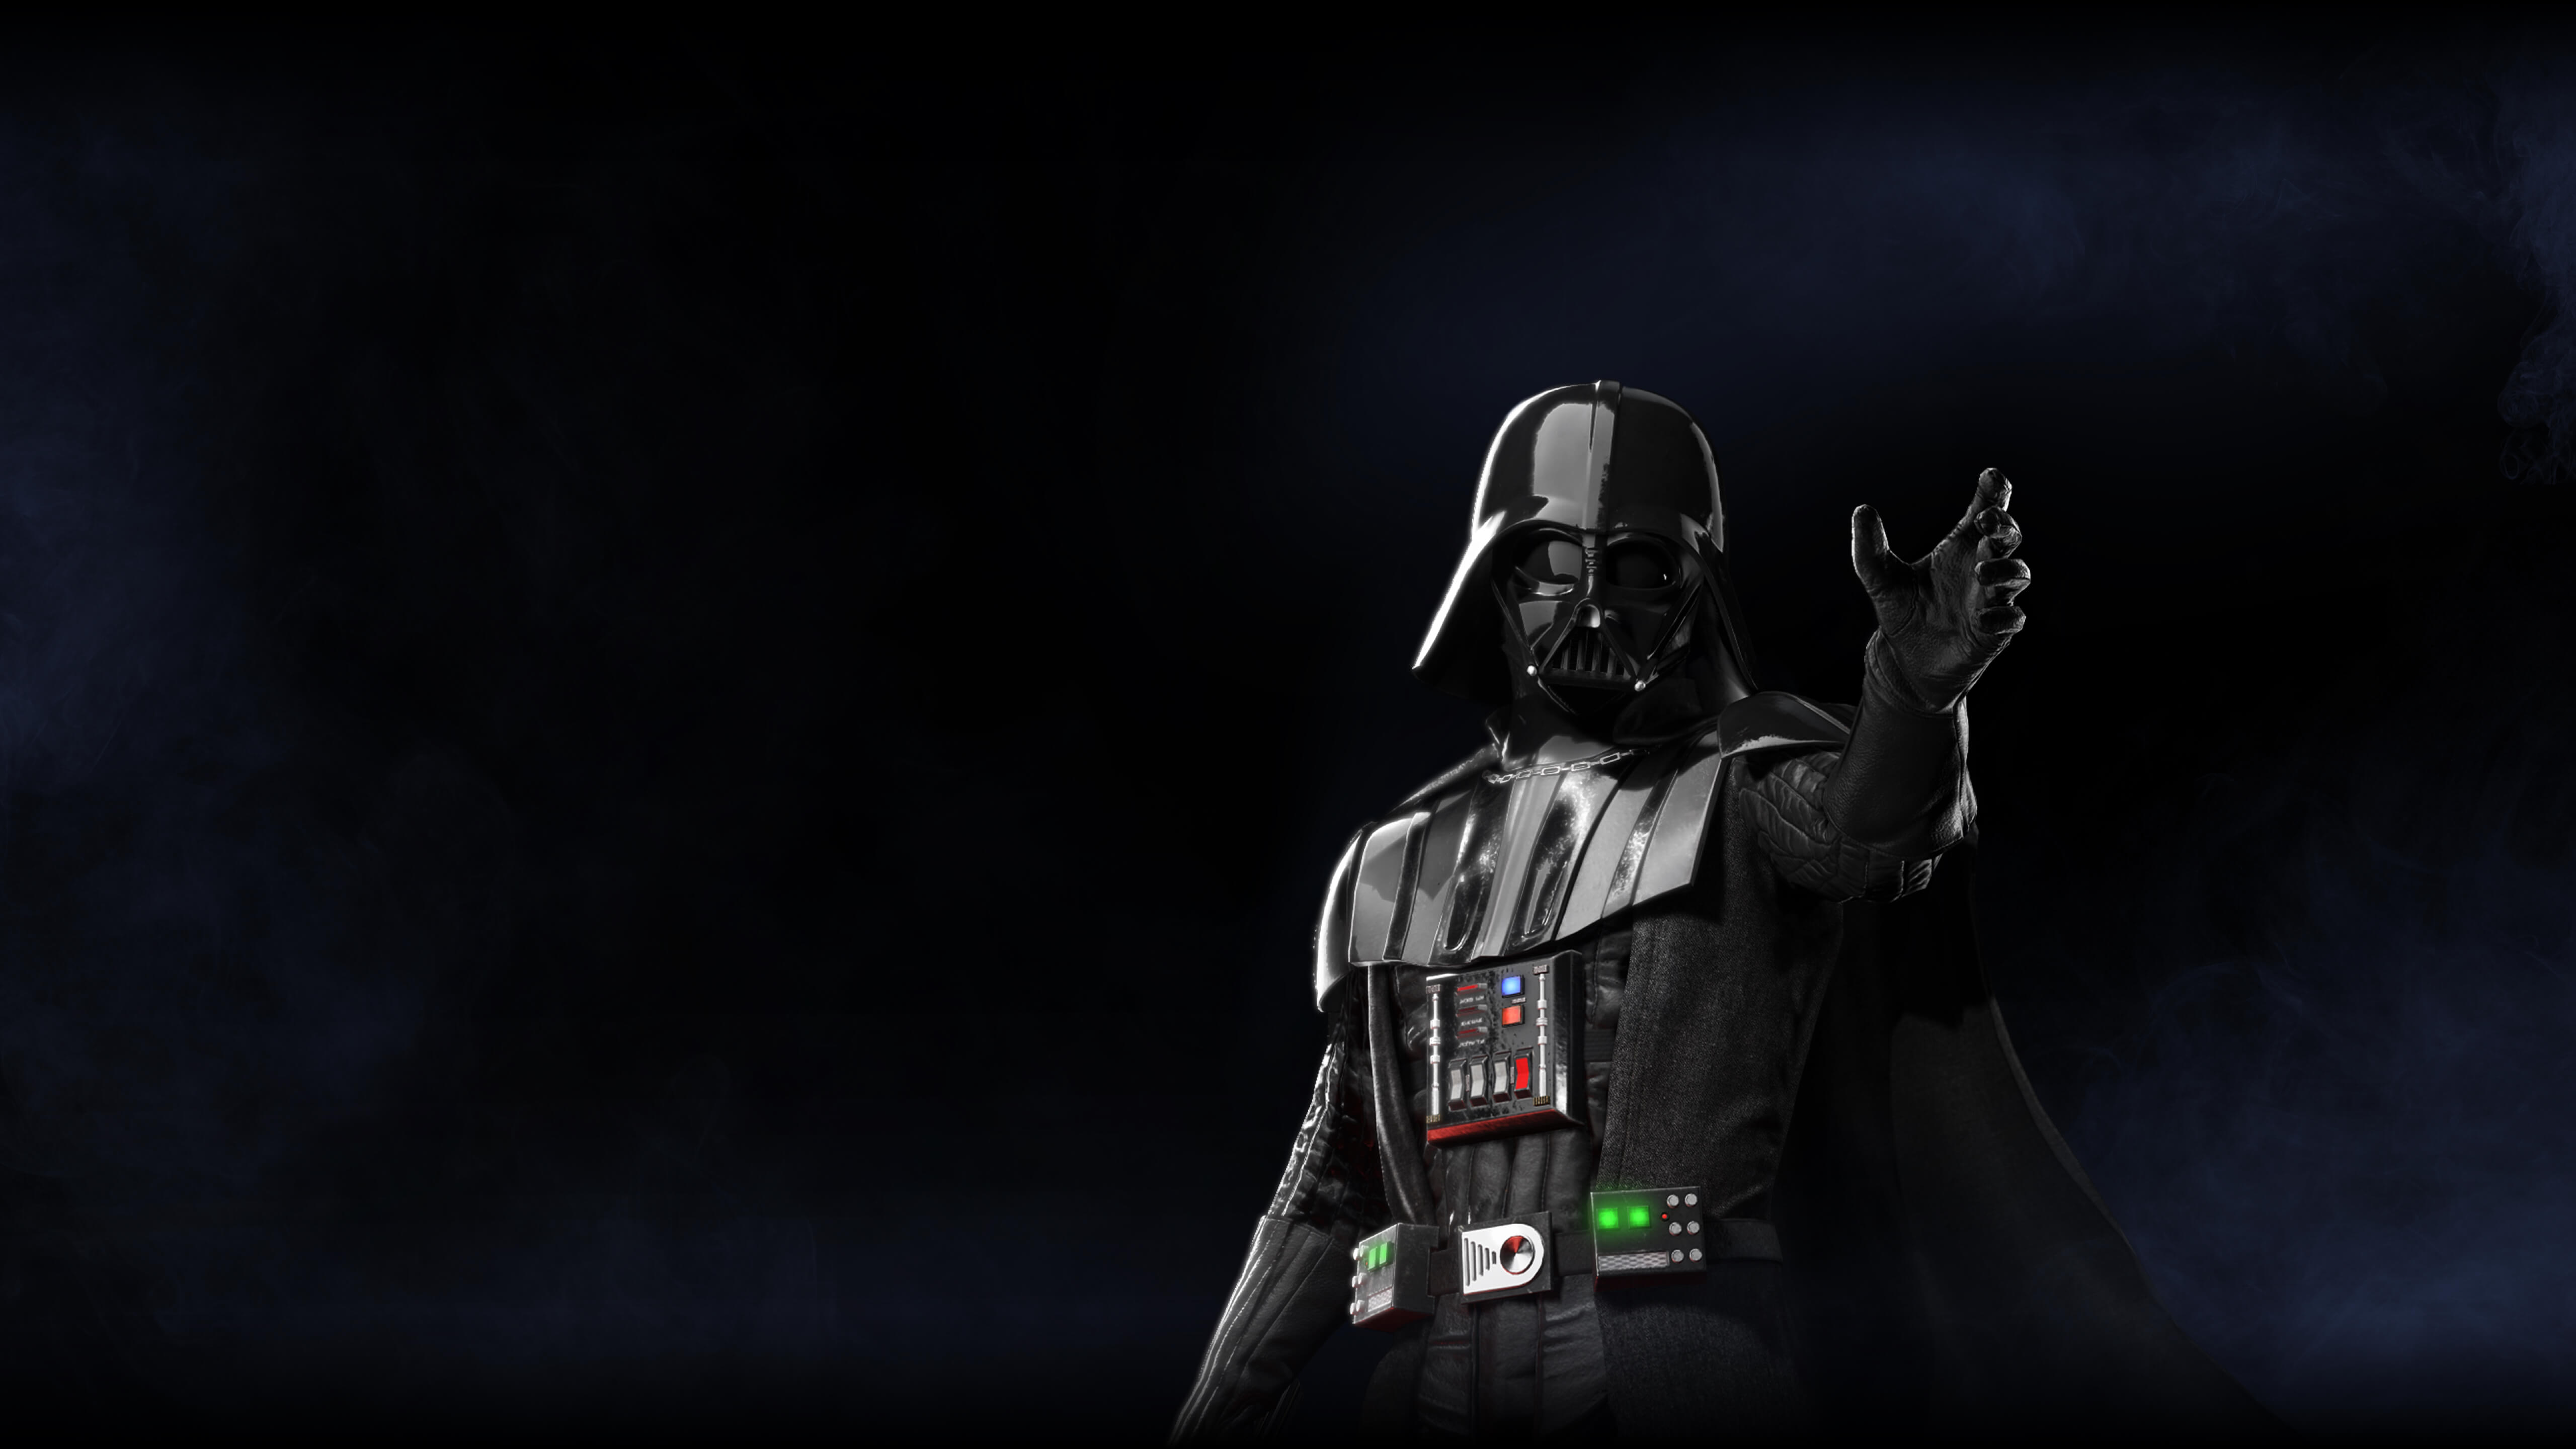 Darth Vader Star Wars Battlefront HD Games, 4k Wallpaper, Image, Background, Photo and Picture